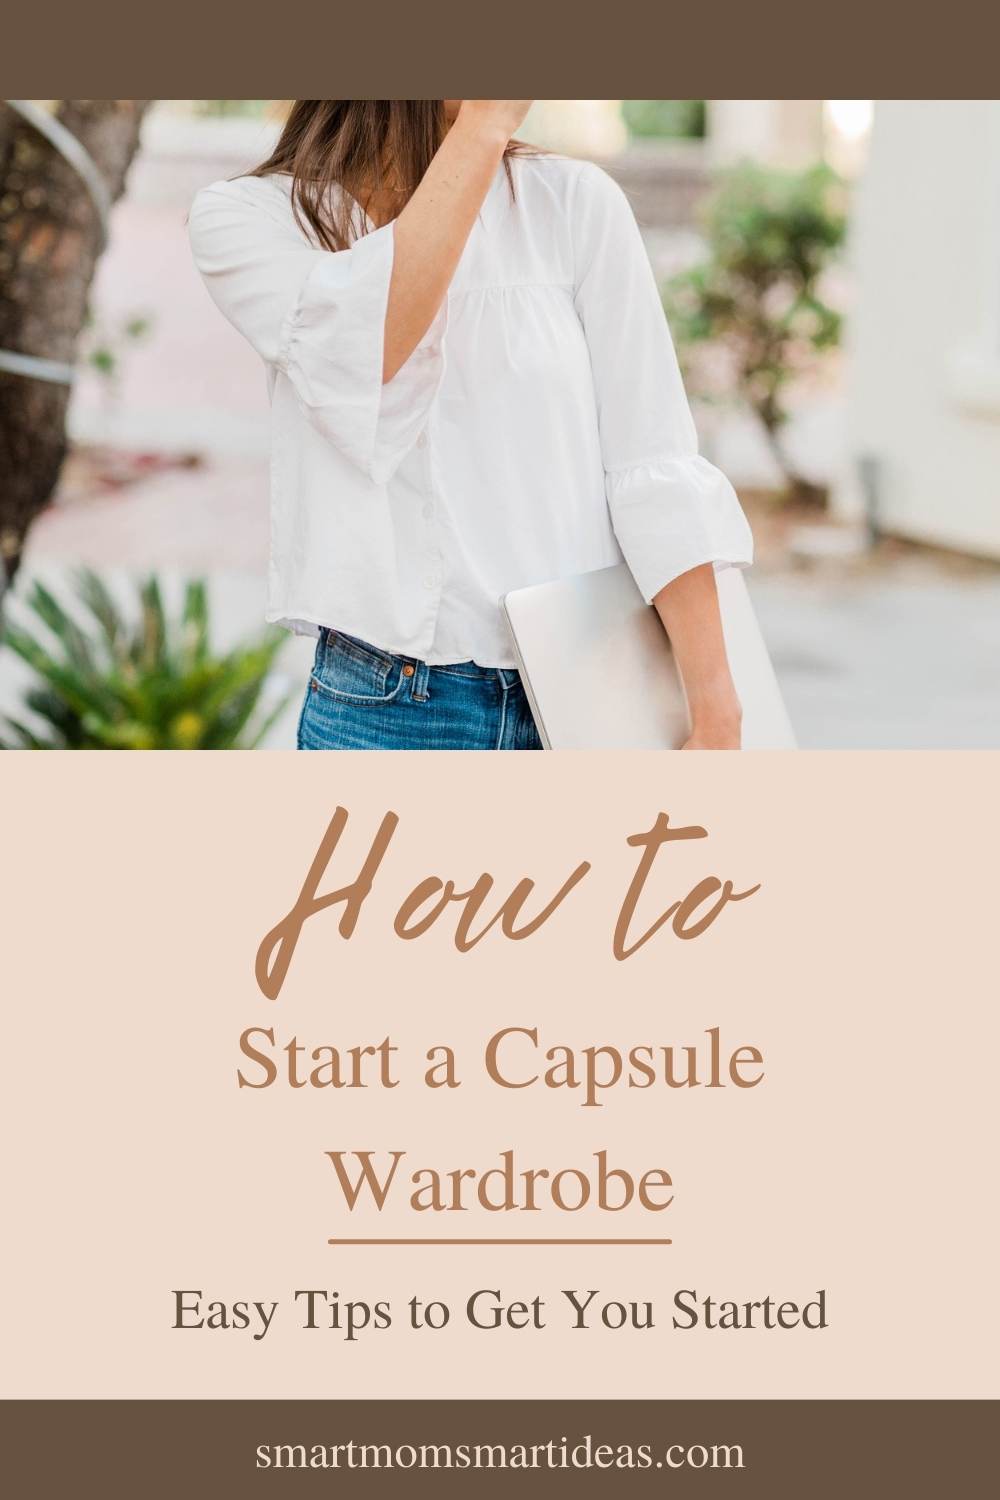 Starting a Capsule Wardrobe